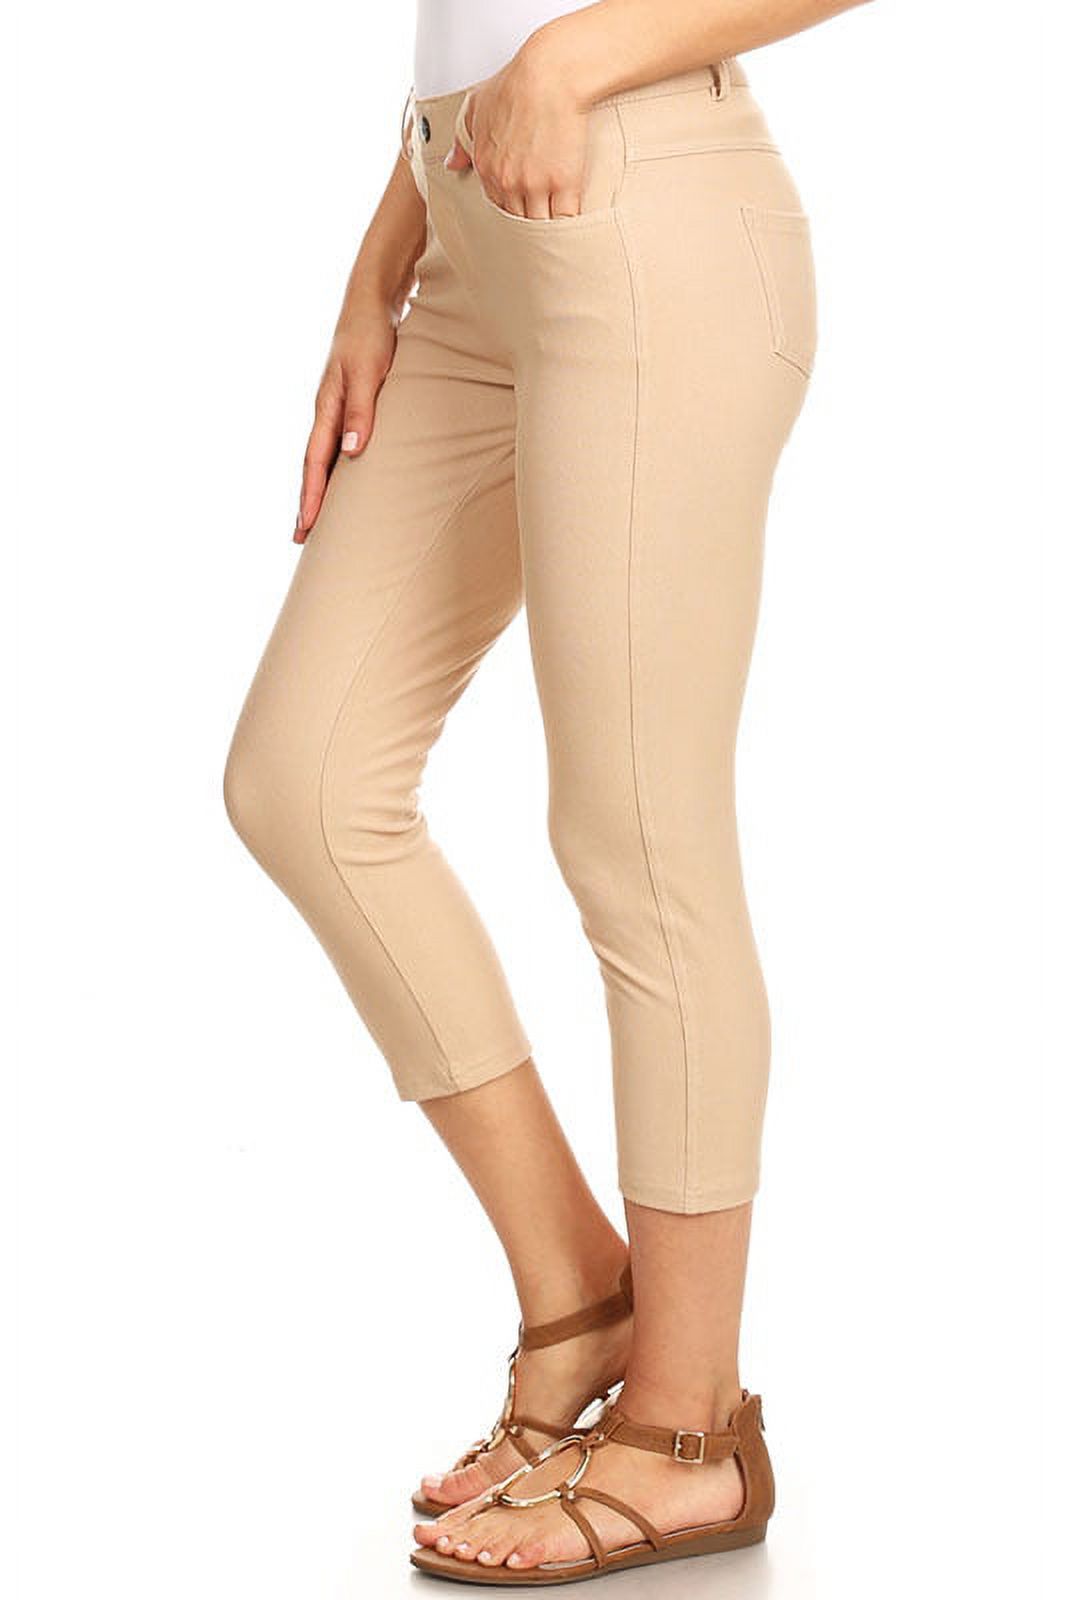 Women's Cotton Blend Capri Jeggings Stretchy Skinny Pants Jeans Leggings - image 2 of 3